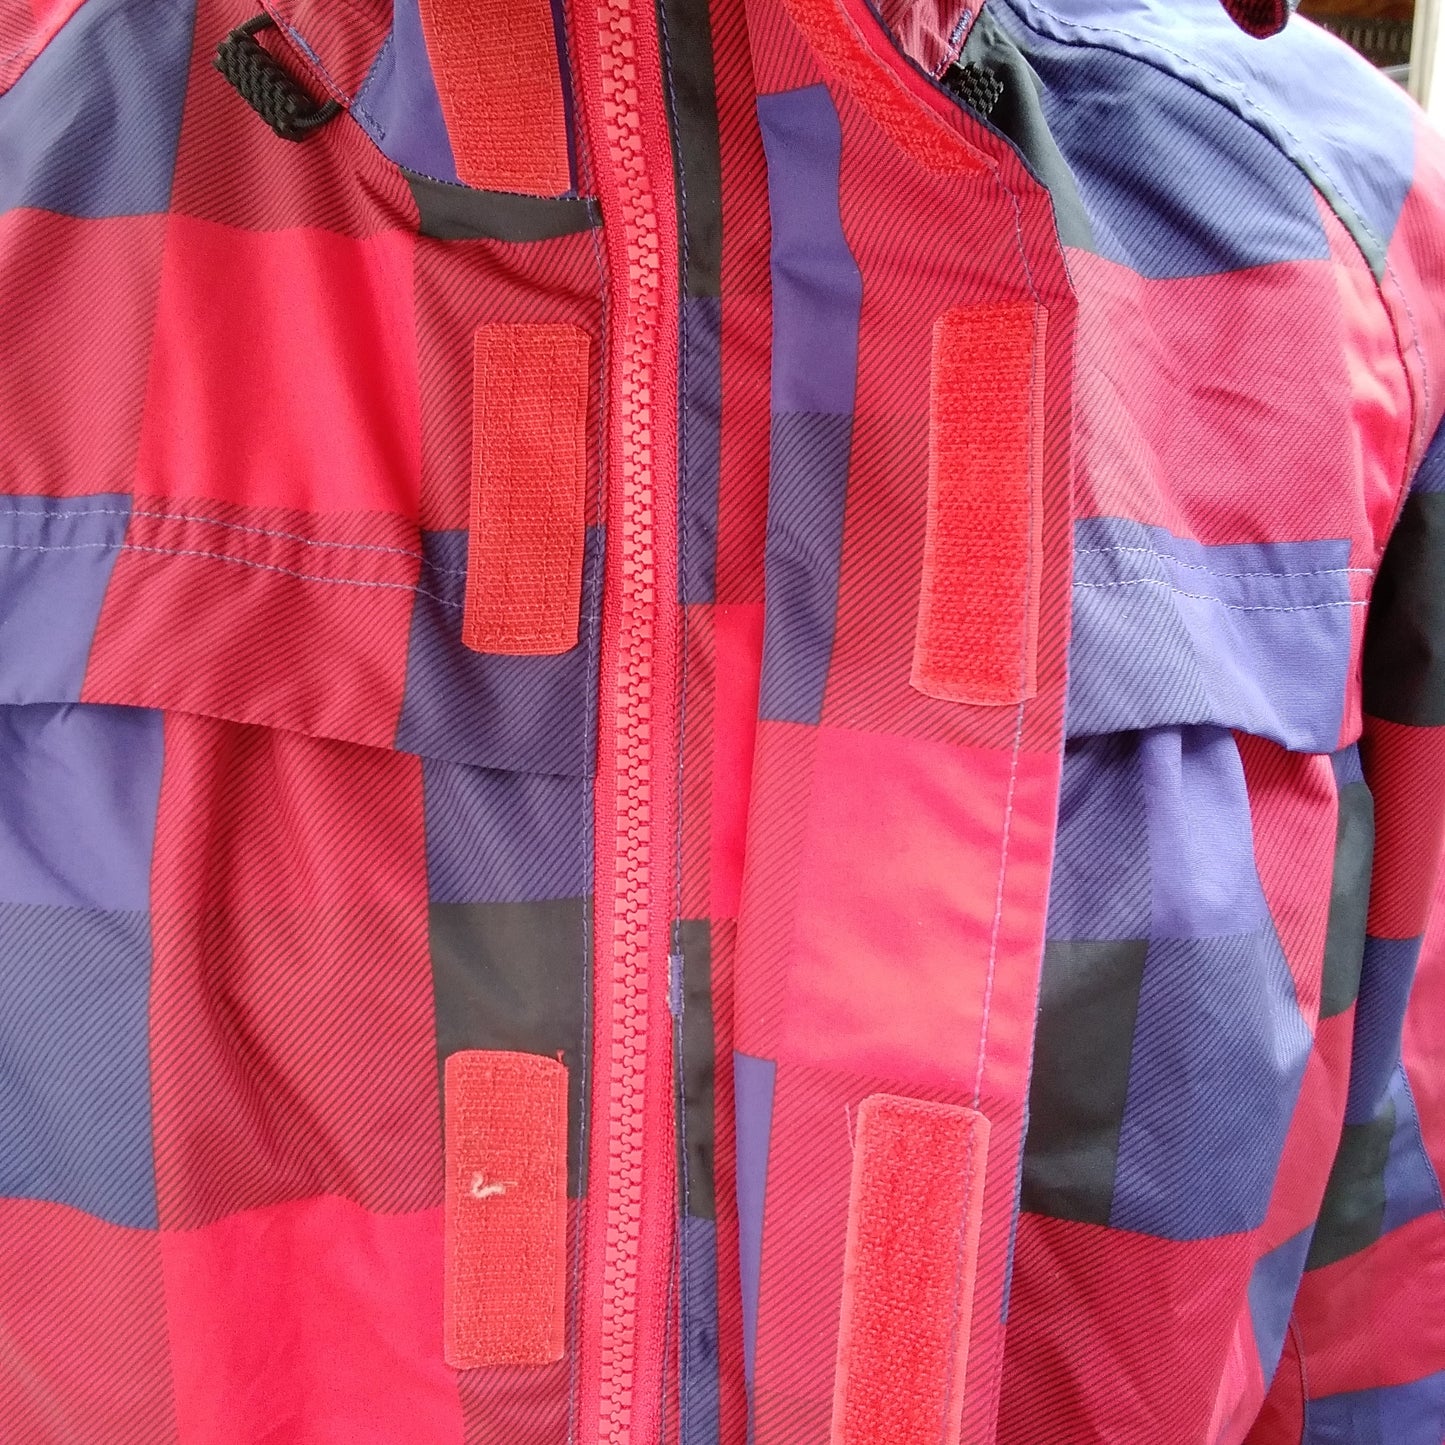 Vans Women's Red Plaid Ski Jacket - Size M/M